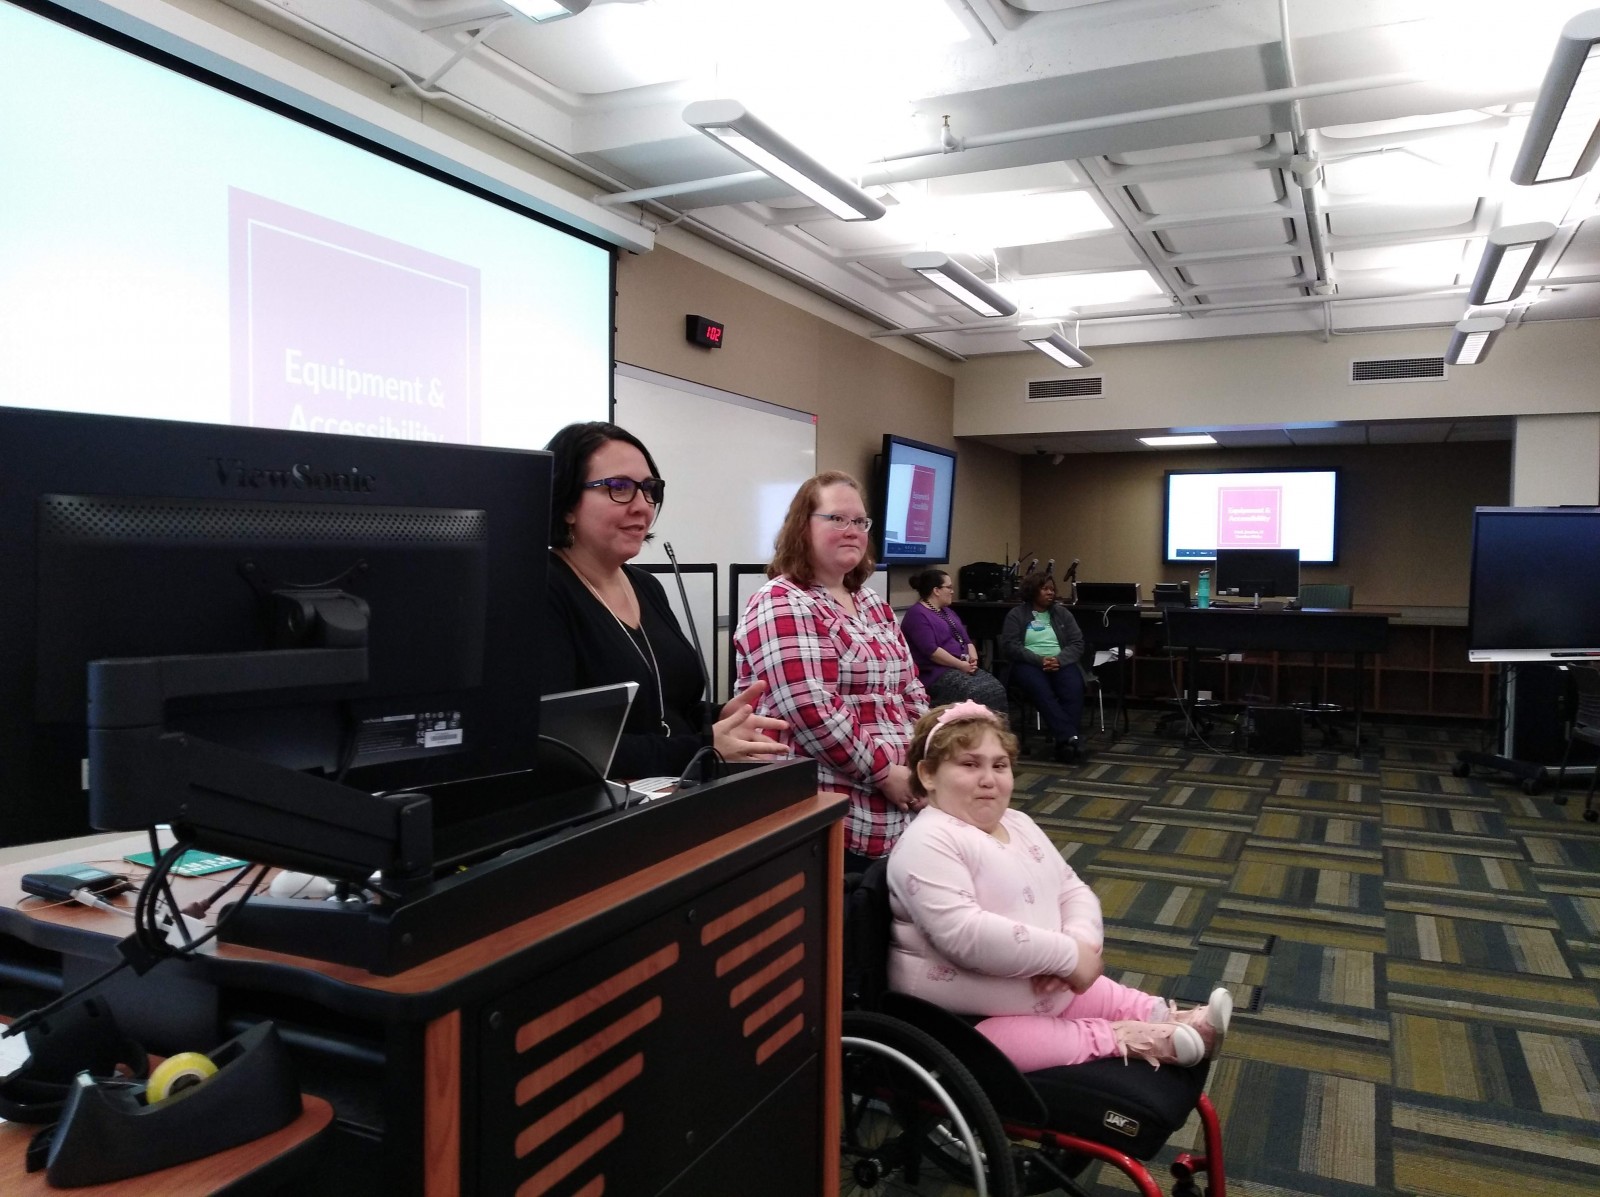 Accessibility speech